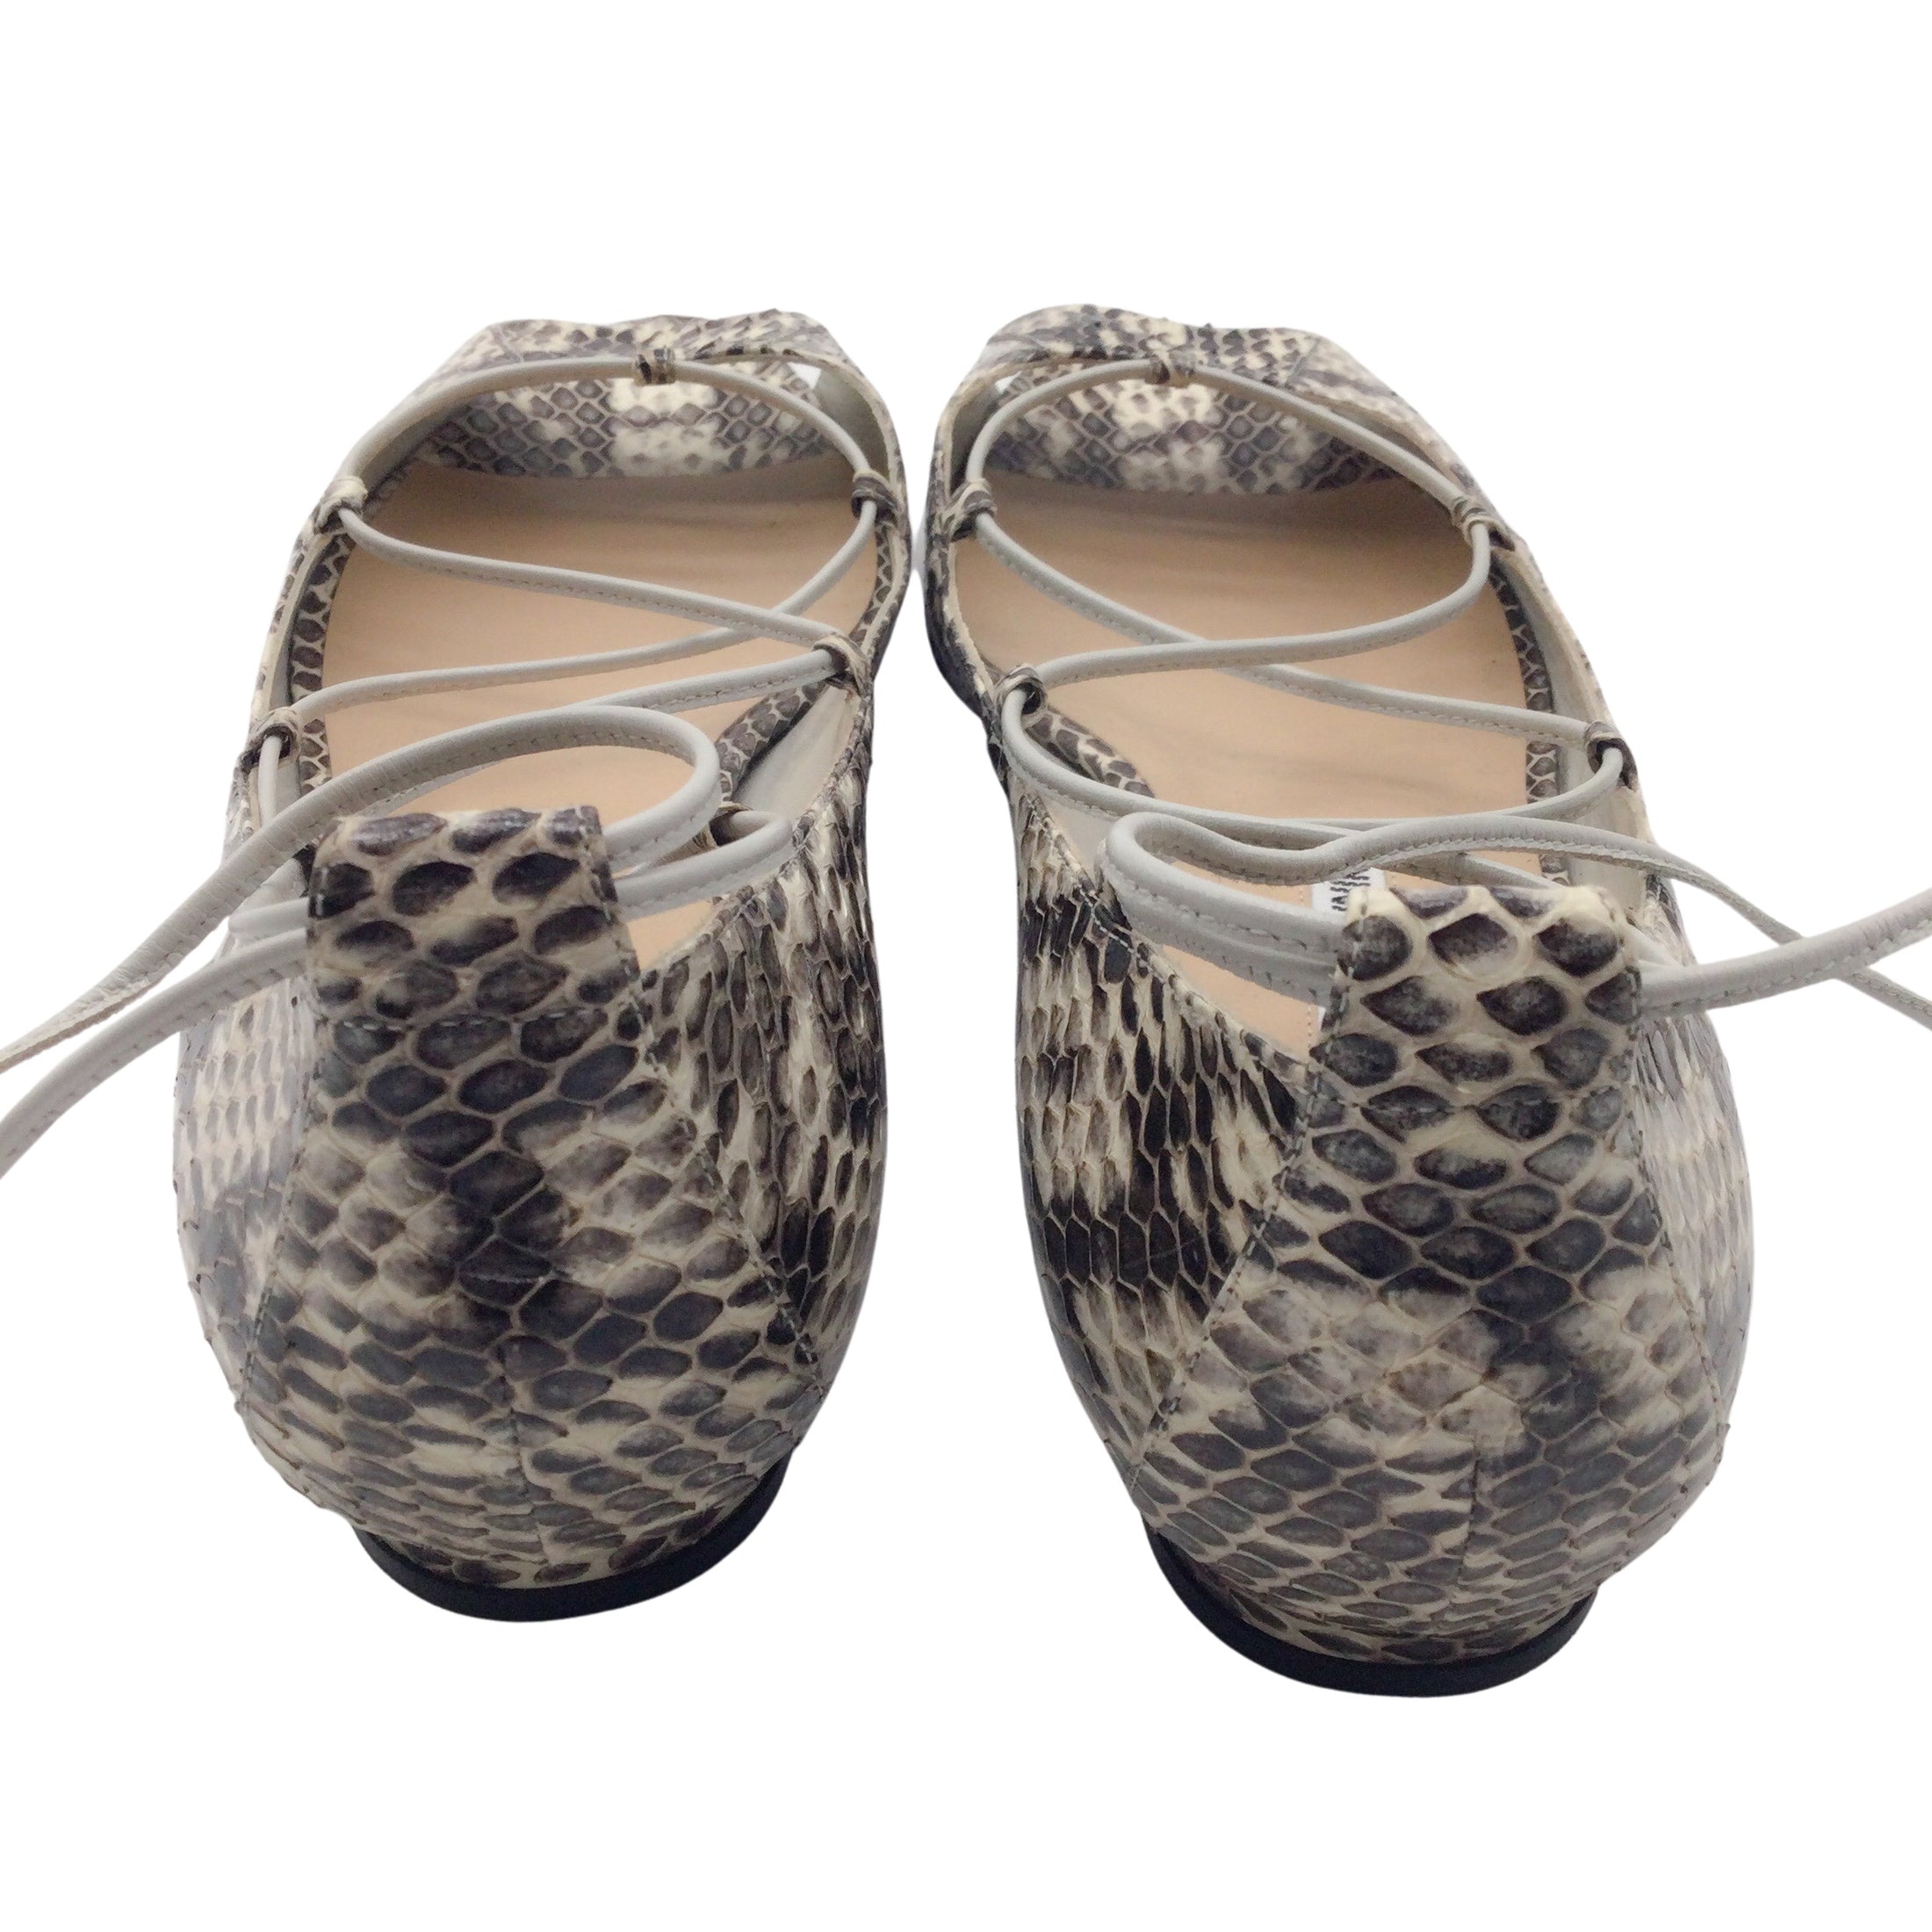 Manolo Blahnik Ivory / Brown Aneska Snakeskin Leather Lace-up Open-toe Flats